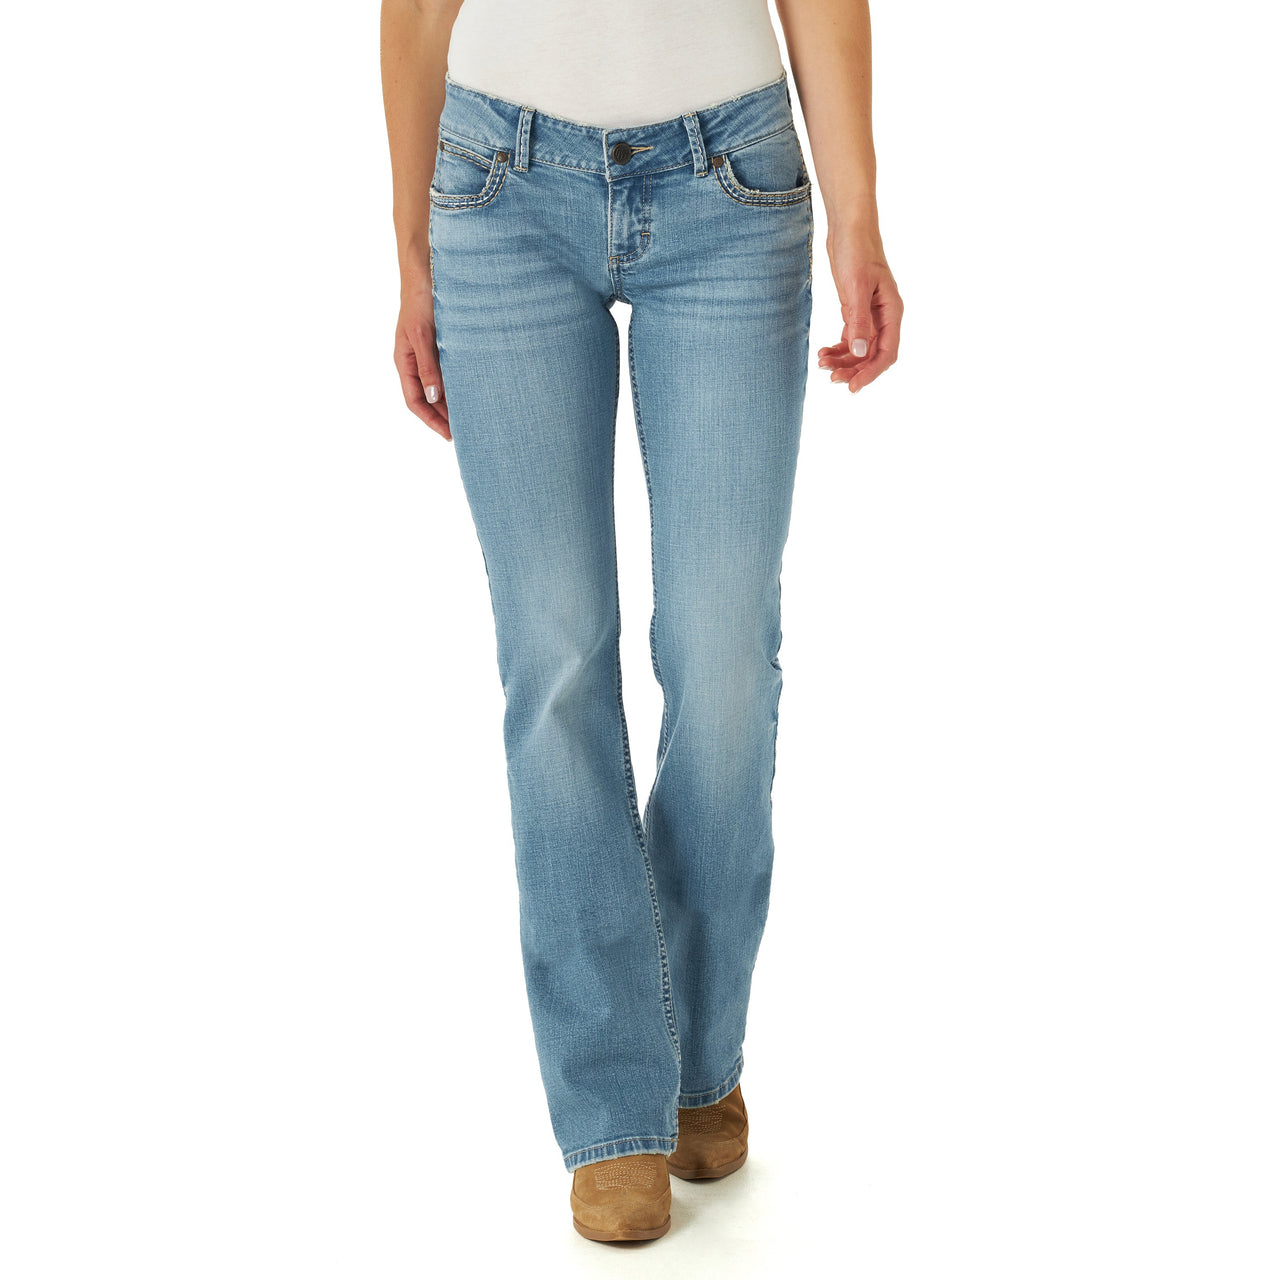 Wrangler Women's Retro Sadie Low Rise Bootcut Jeans - Light Wash